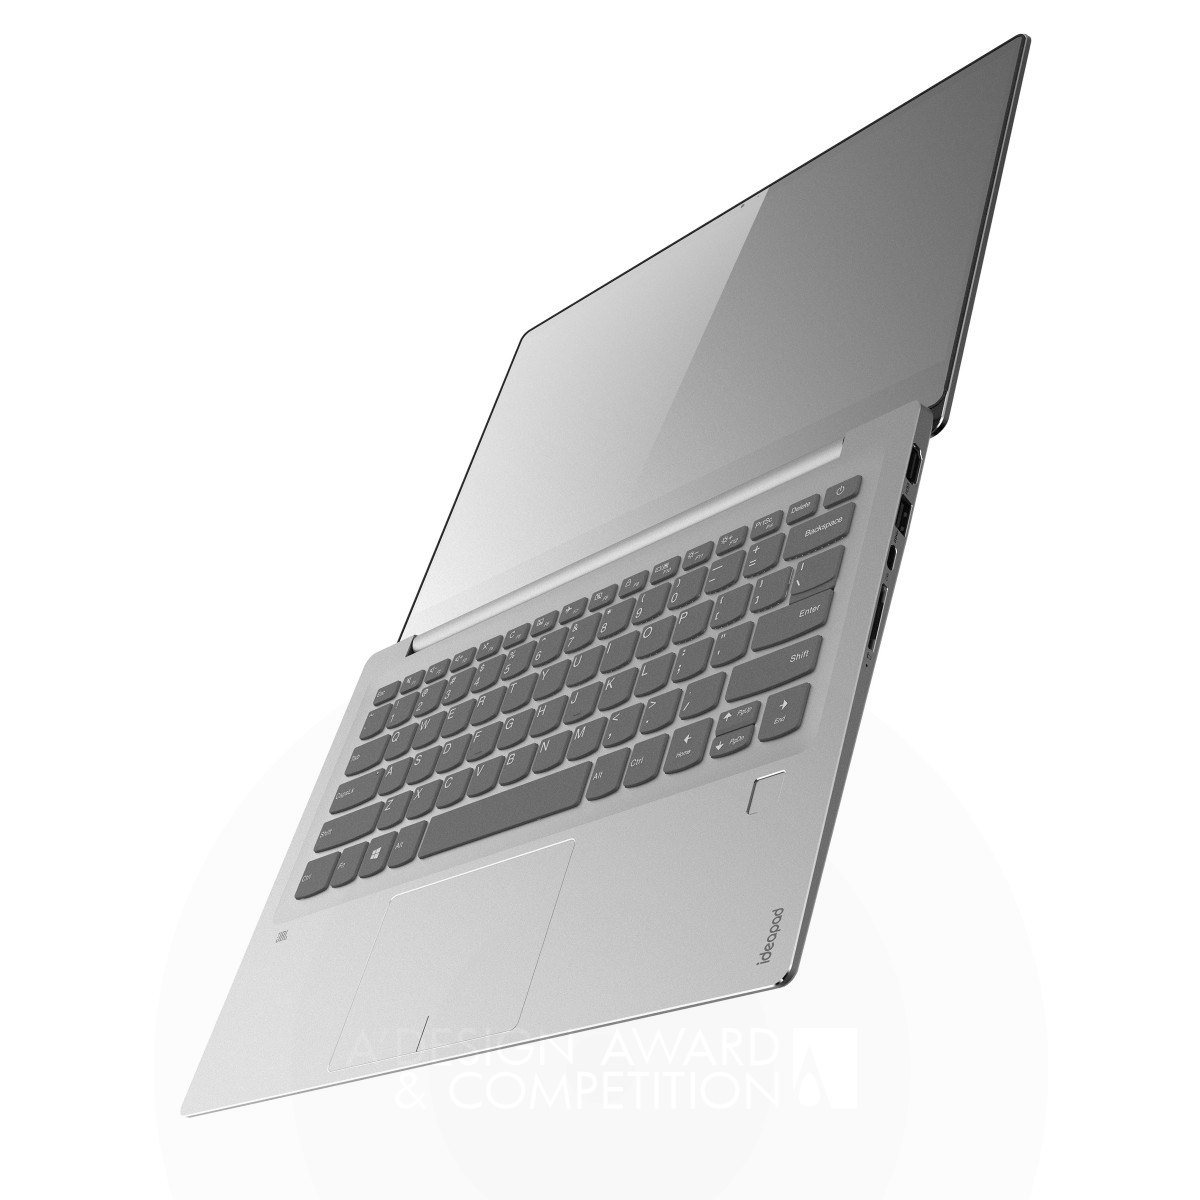 ideapad 720S-14 2017 laptop computers